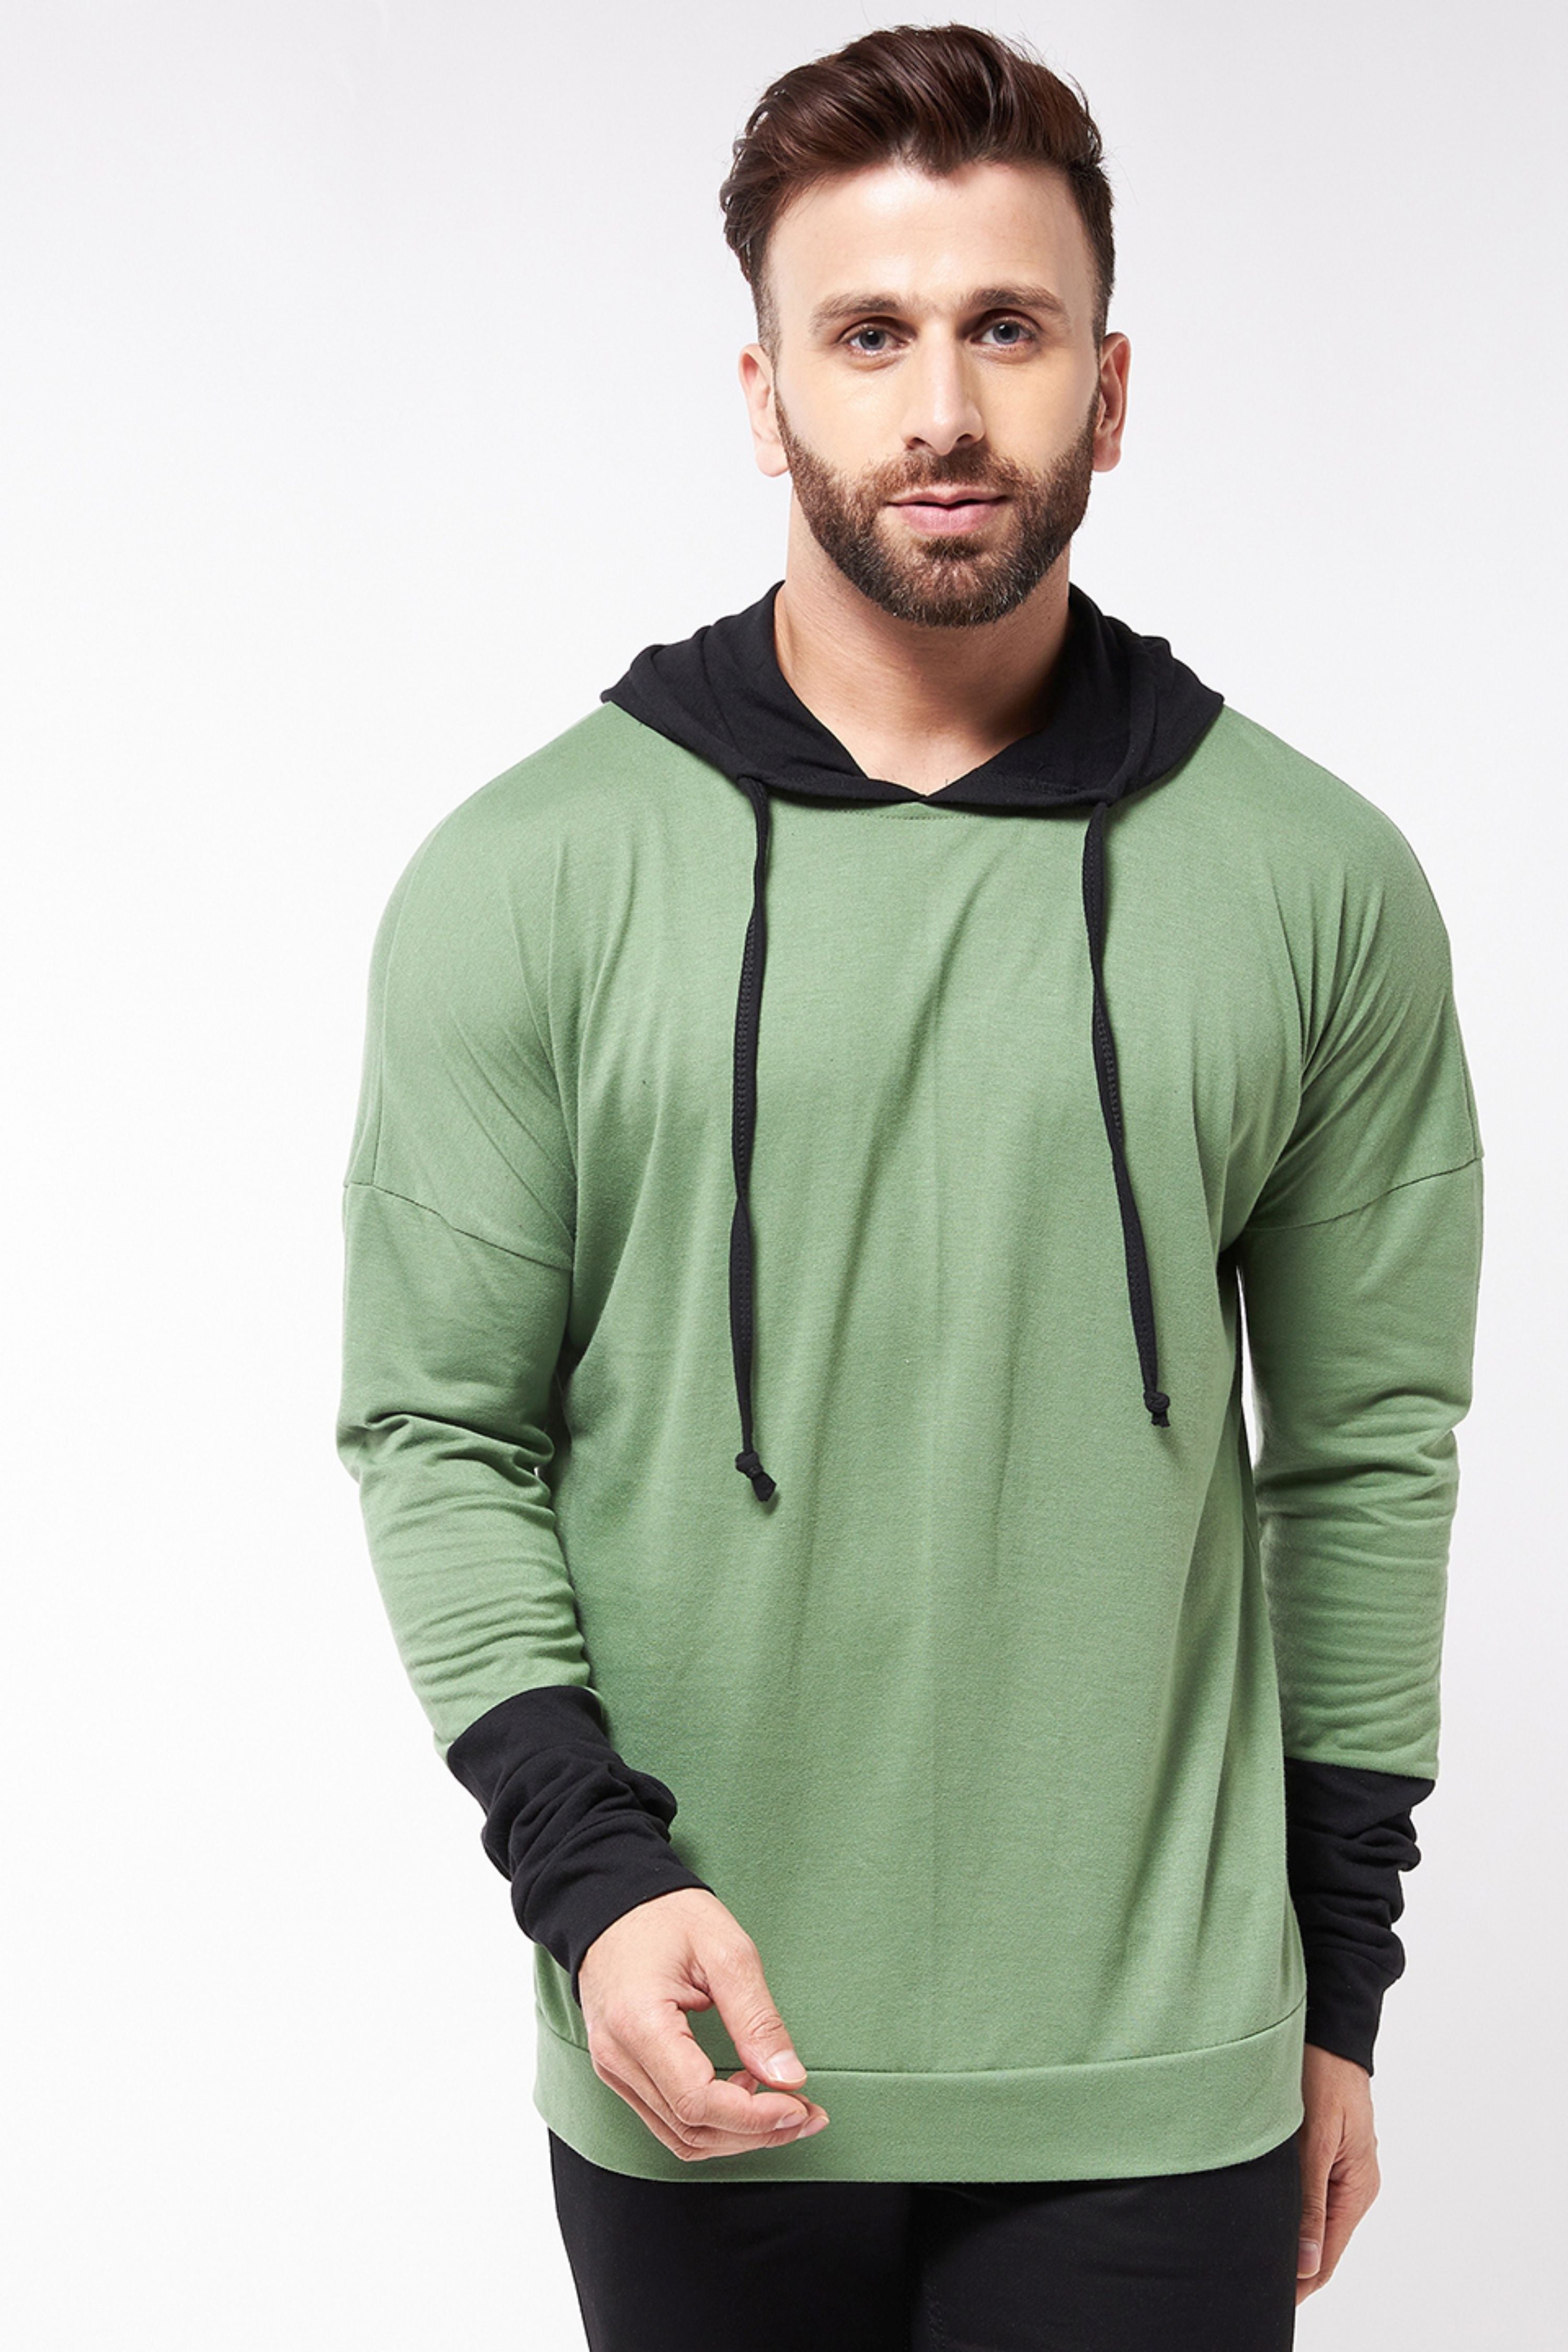 Drop Shoulder Moss Green/ Black Full Sleeve Hooded T-Shirt